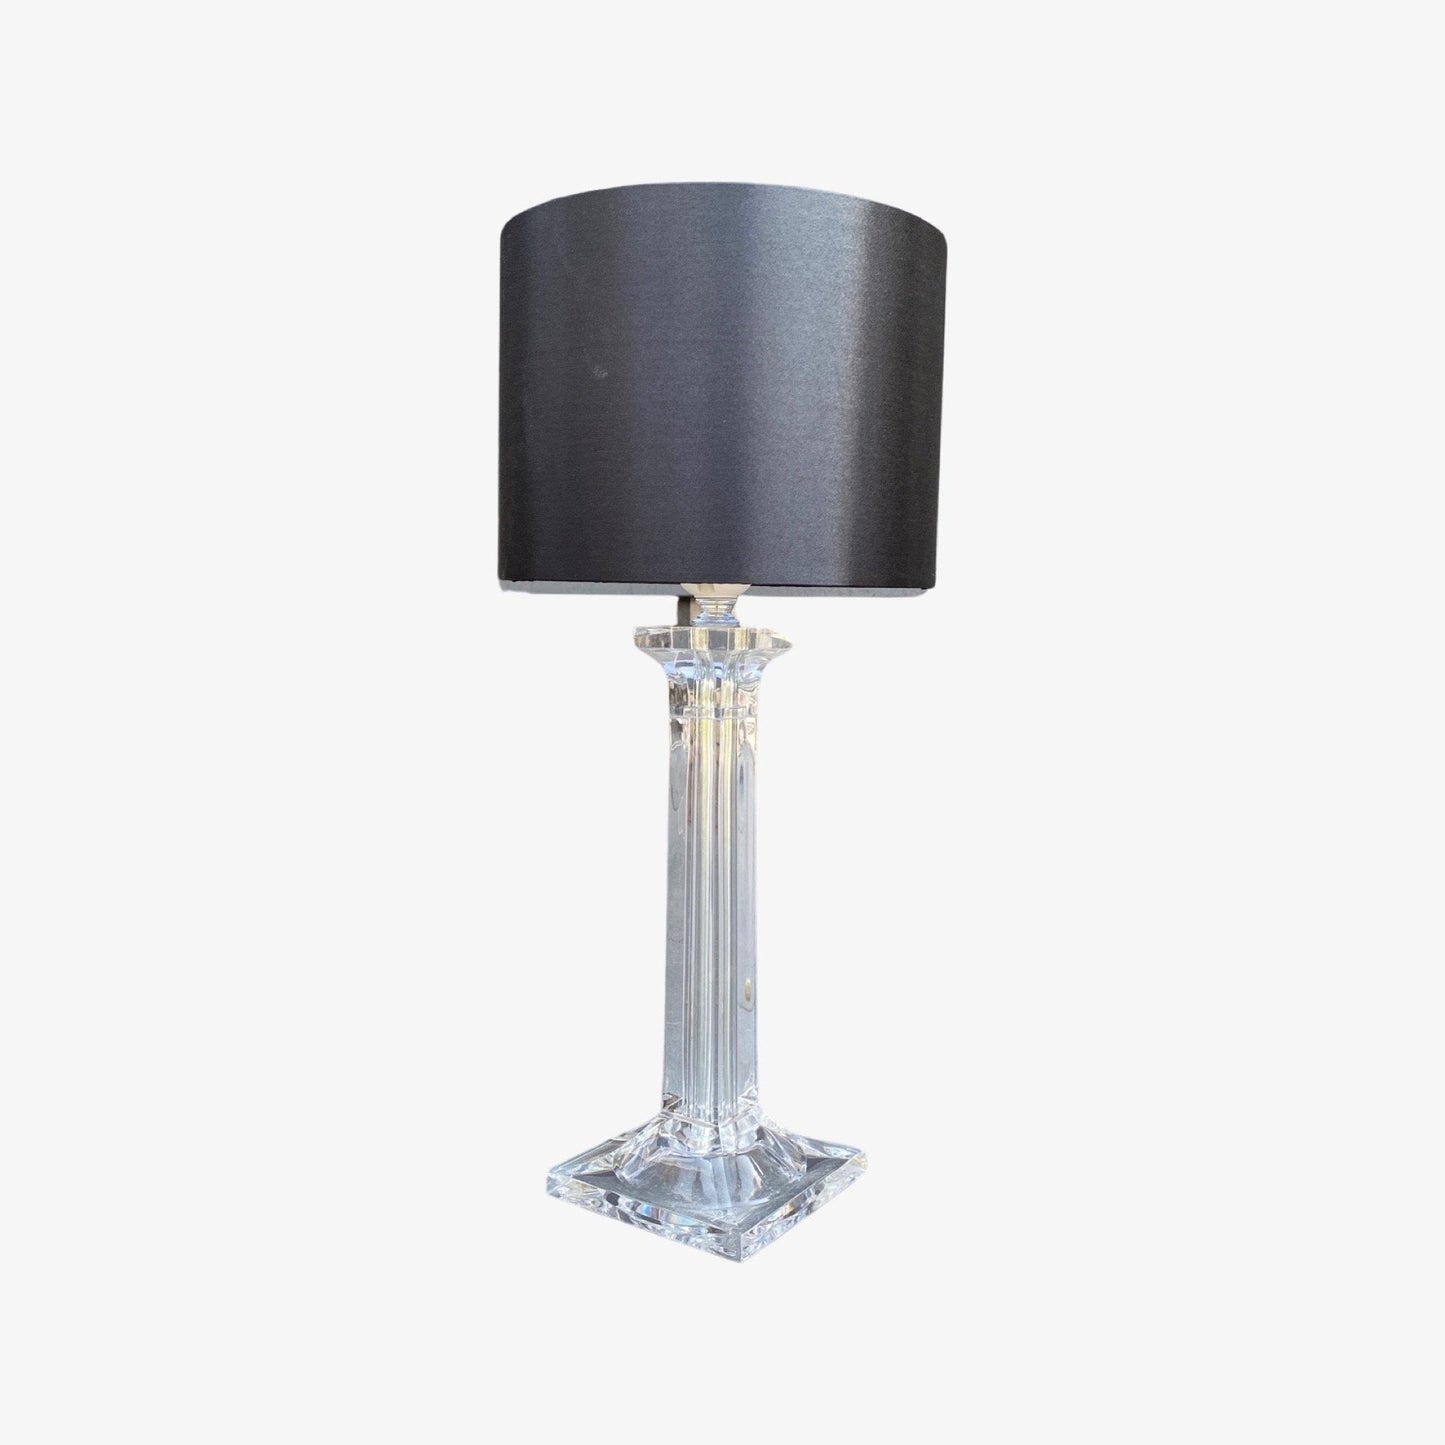 1970s Vintage Plexiglas Light | Mid Century Modern Light With Black Lampshade | Transparent Plexi glass Retro Table Light / Table Lamp - FancyVintage.nl -